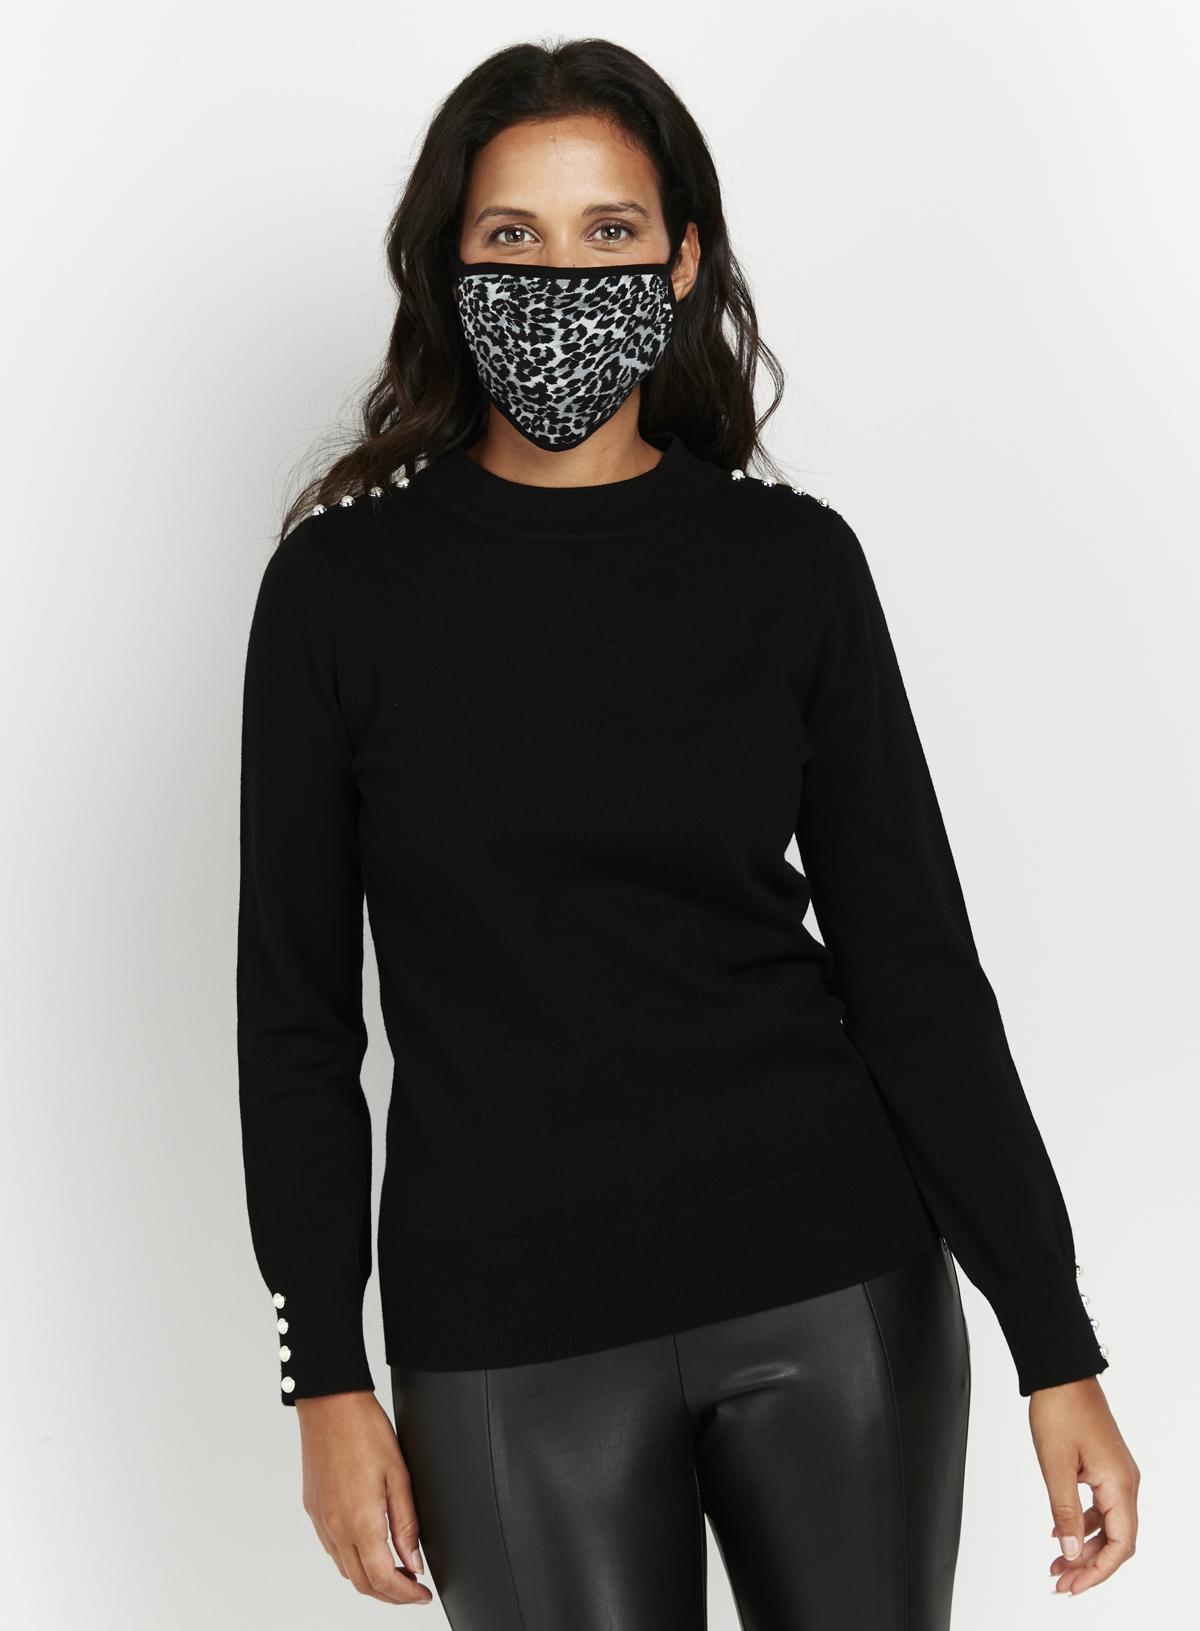 Plus Size Face Mask 2 Pack Black 1